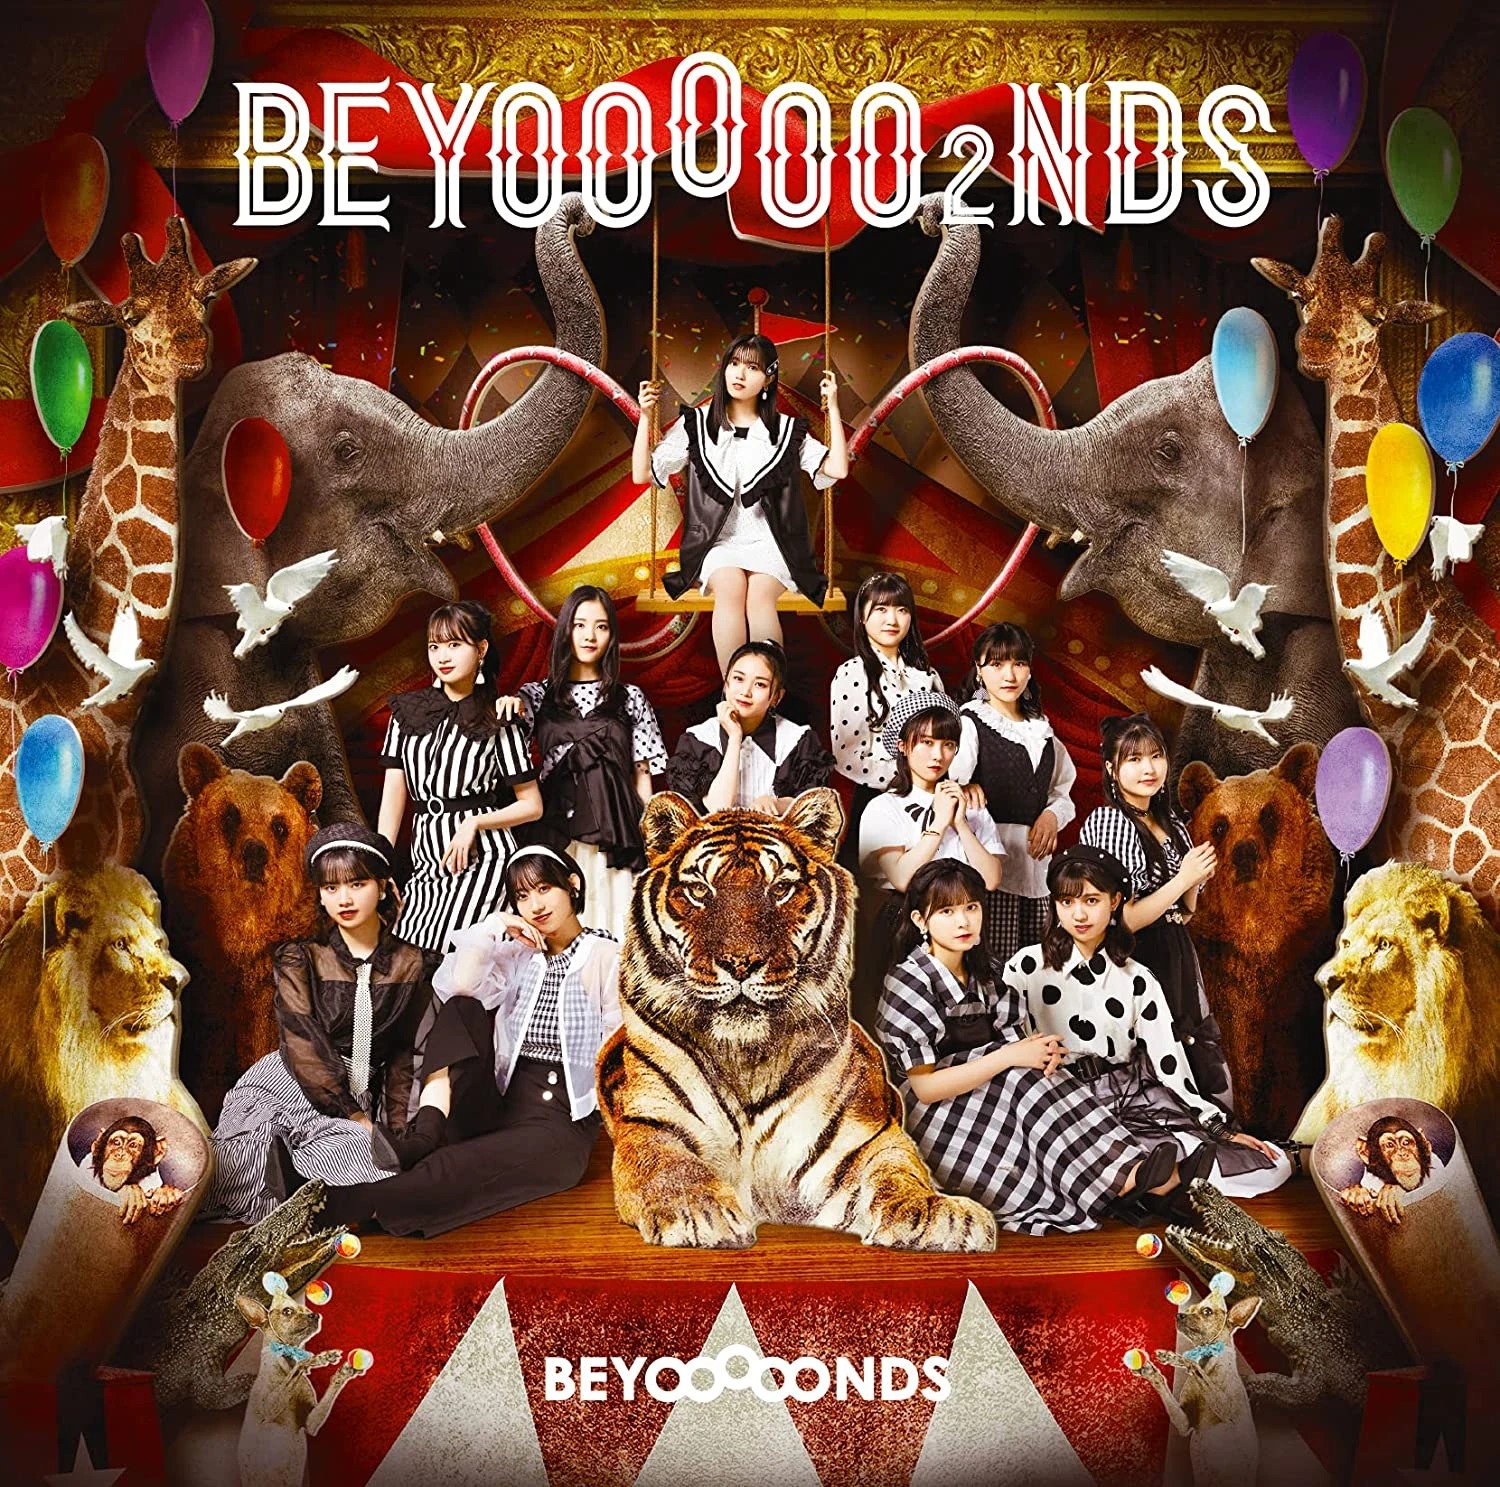 BEYOOOOONDS BEYOOOOO2NDS cover artwork